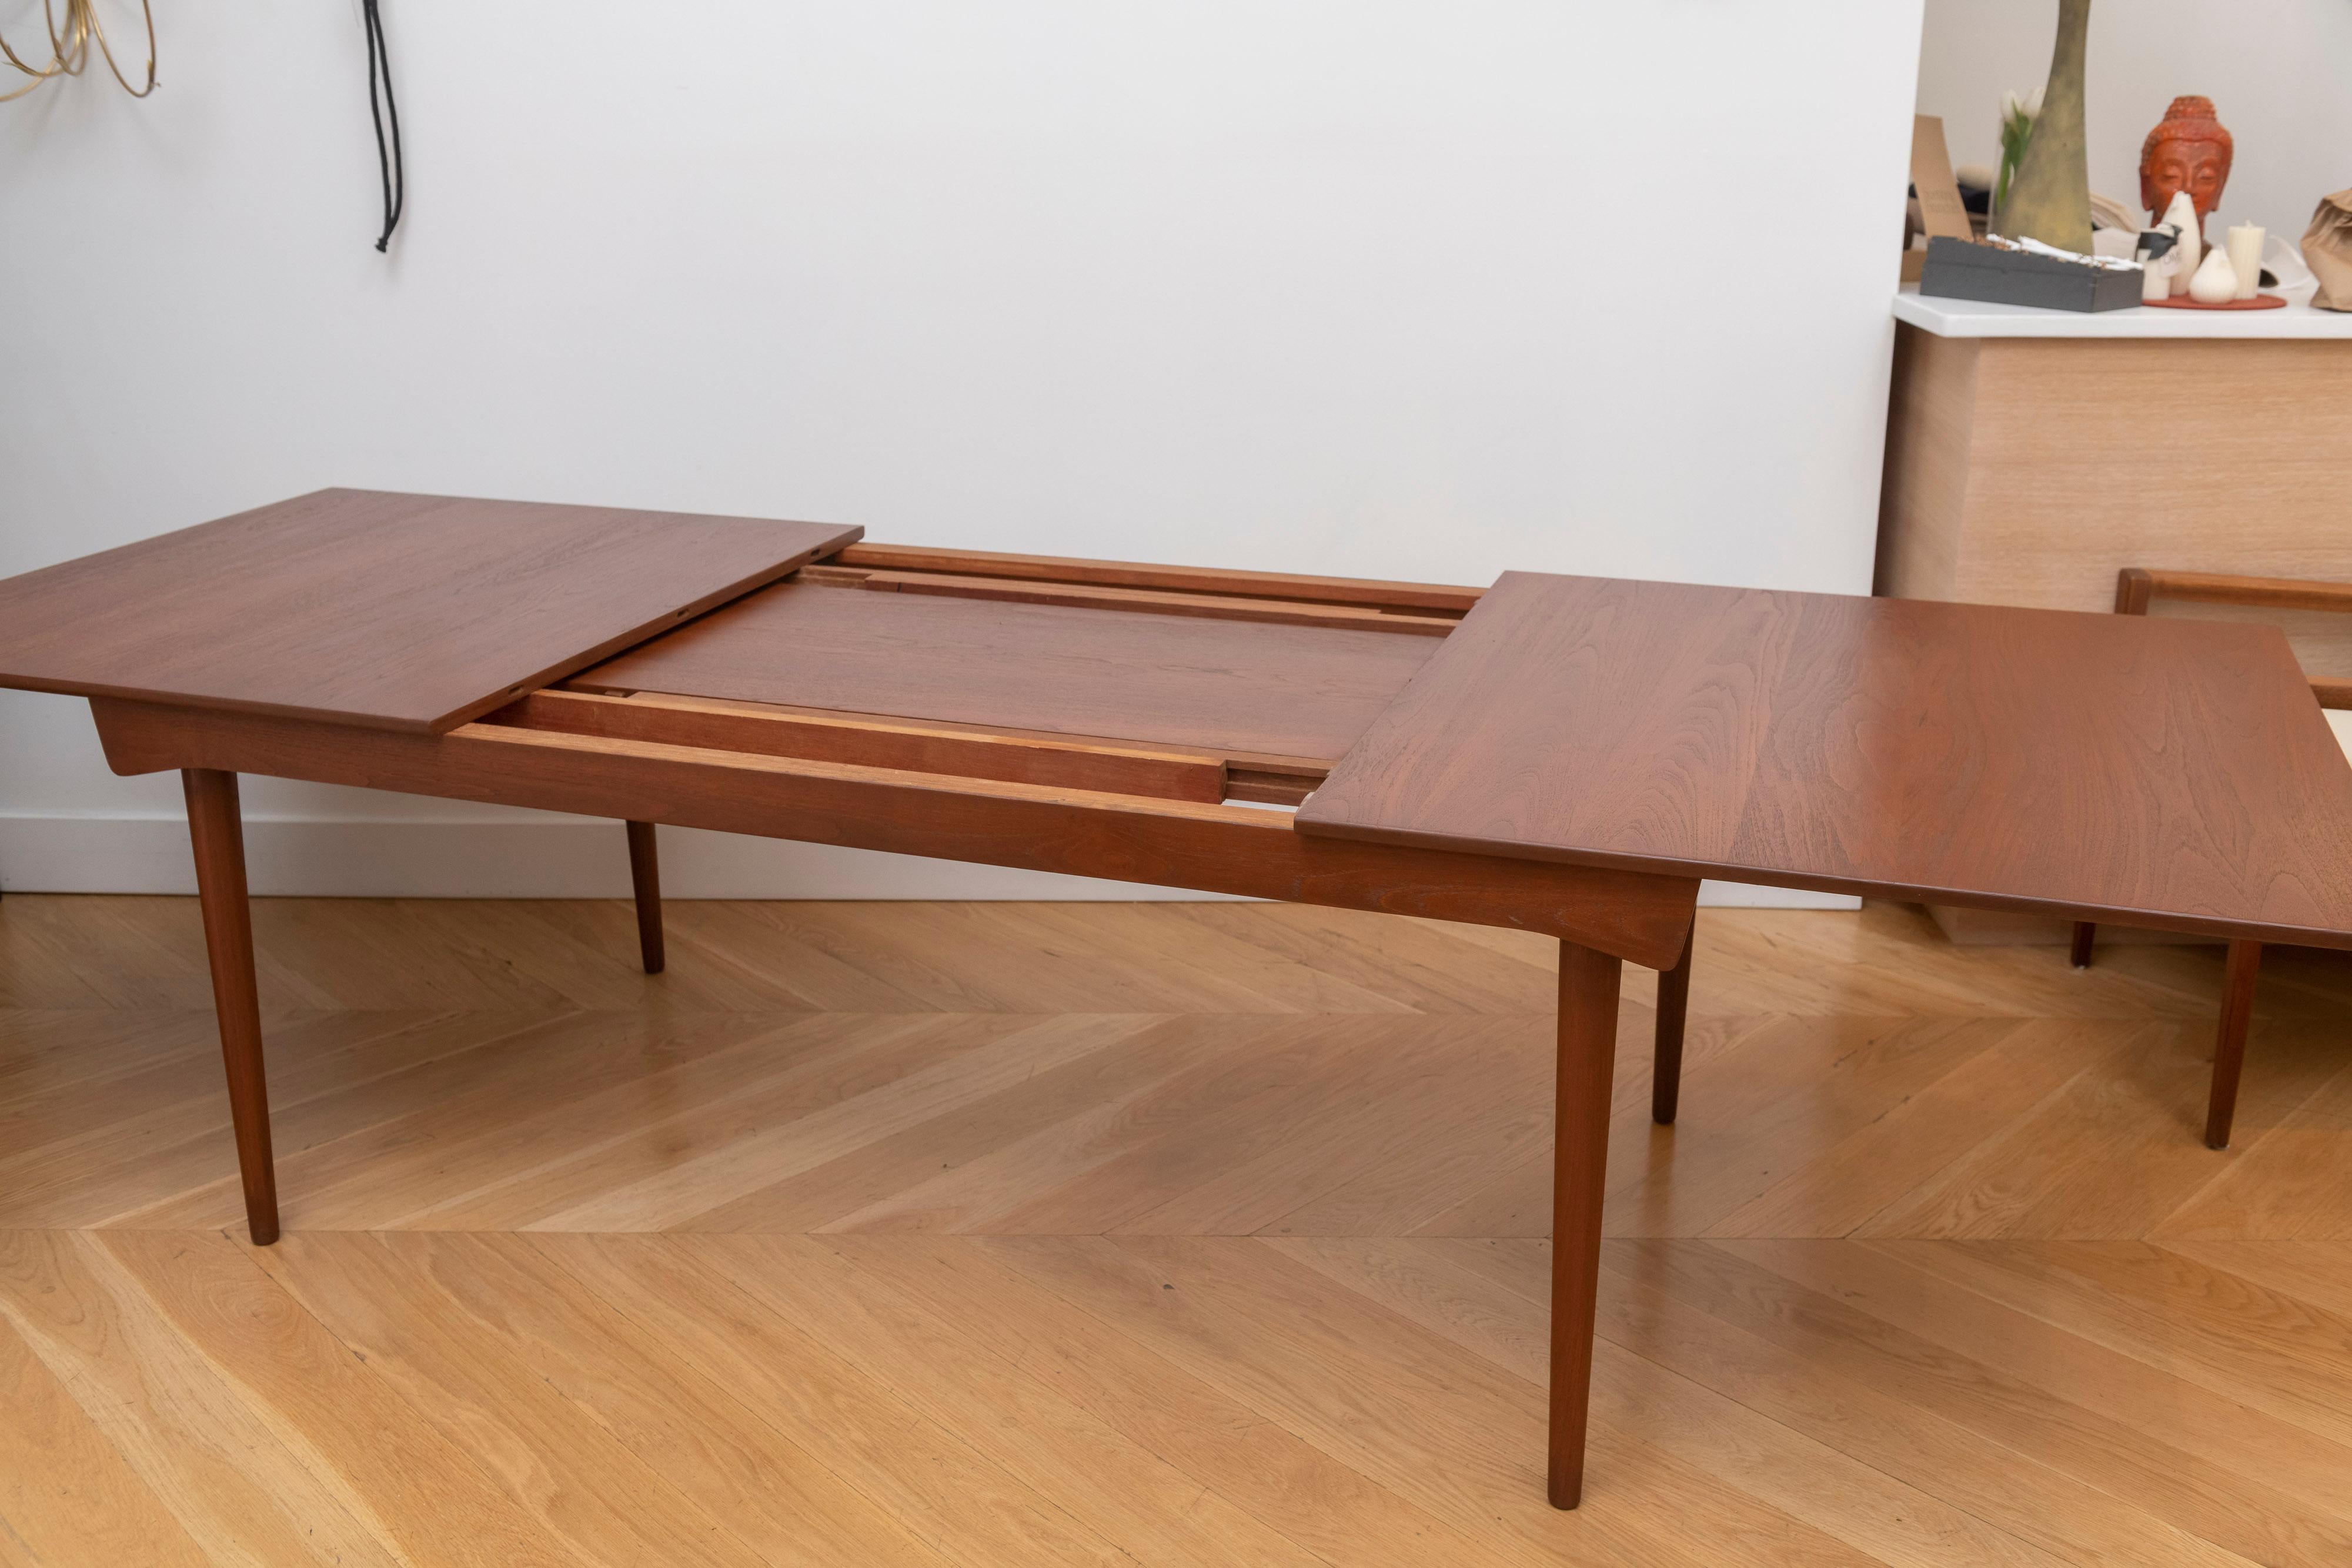 20th Century Solid Teak Extension Table Model FD 540by Finn Juhl for France & Son